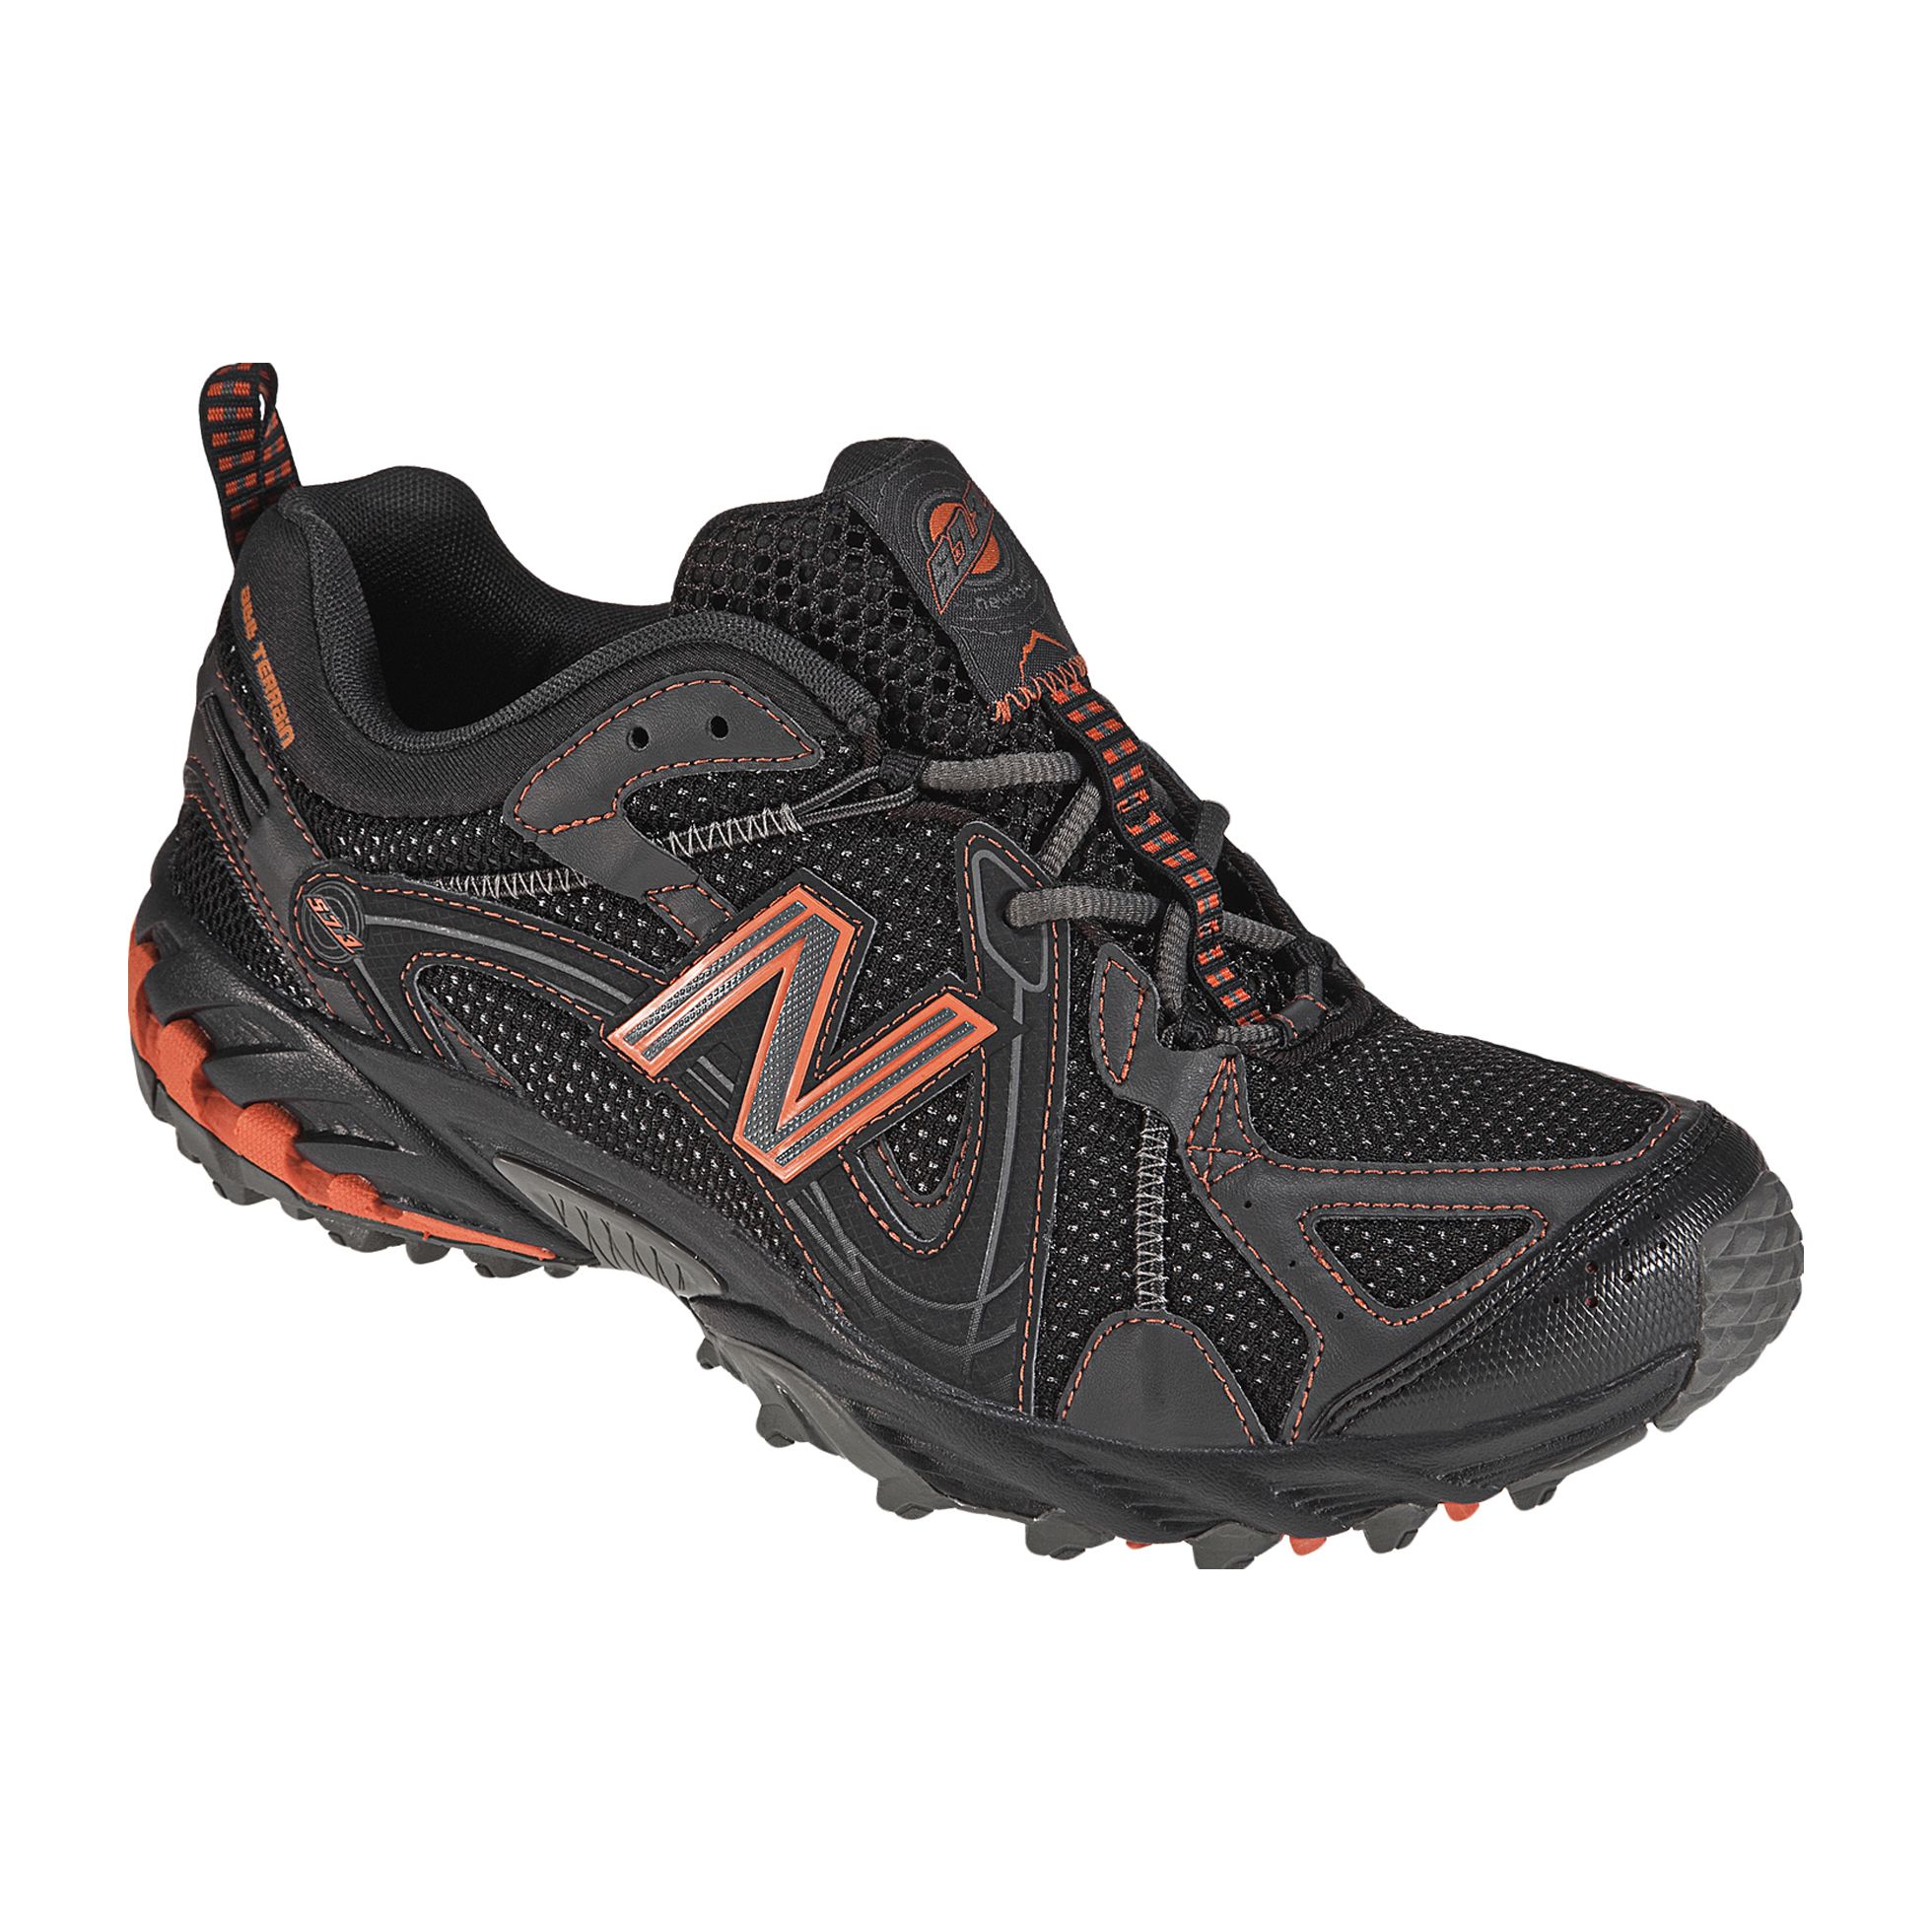 New Balance Men's 573 Trail Running Athletic Shoe - Black/Orange